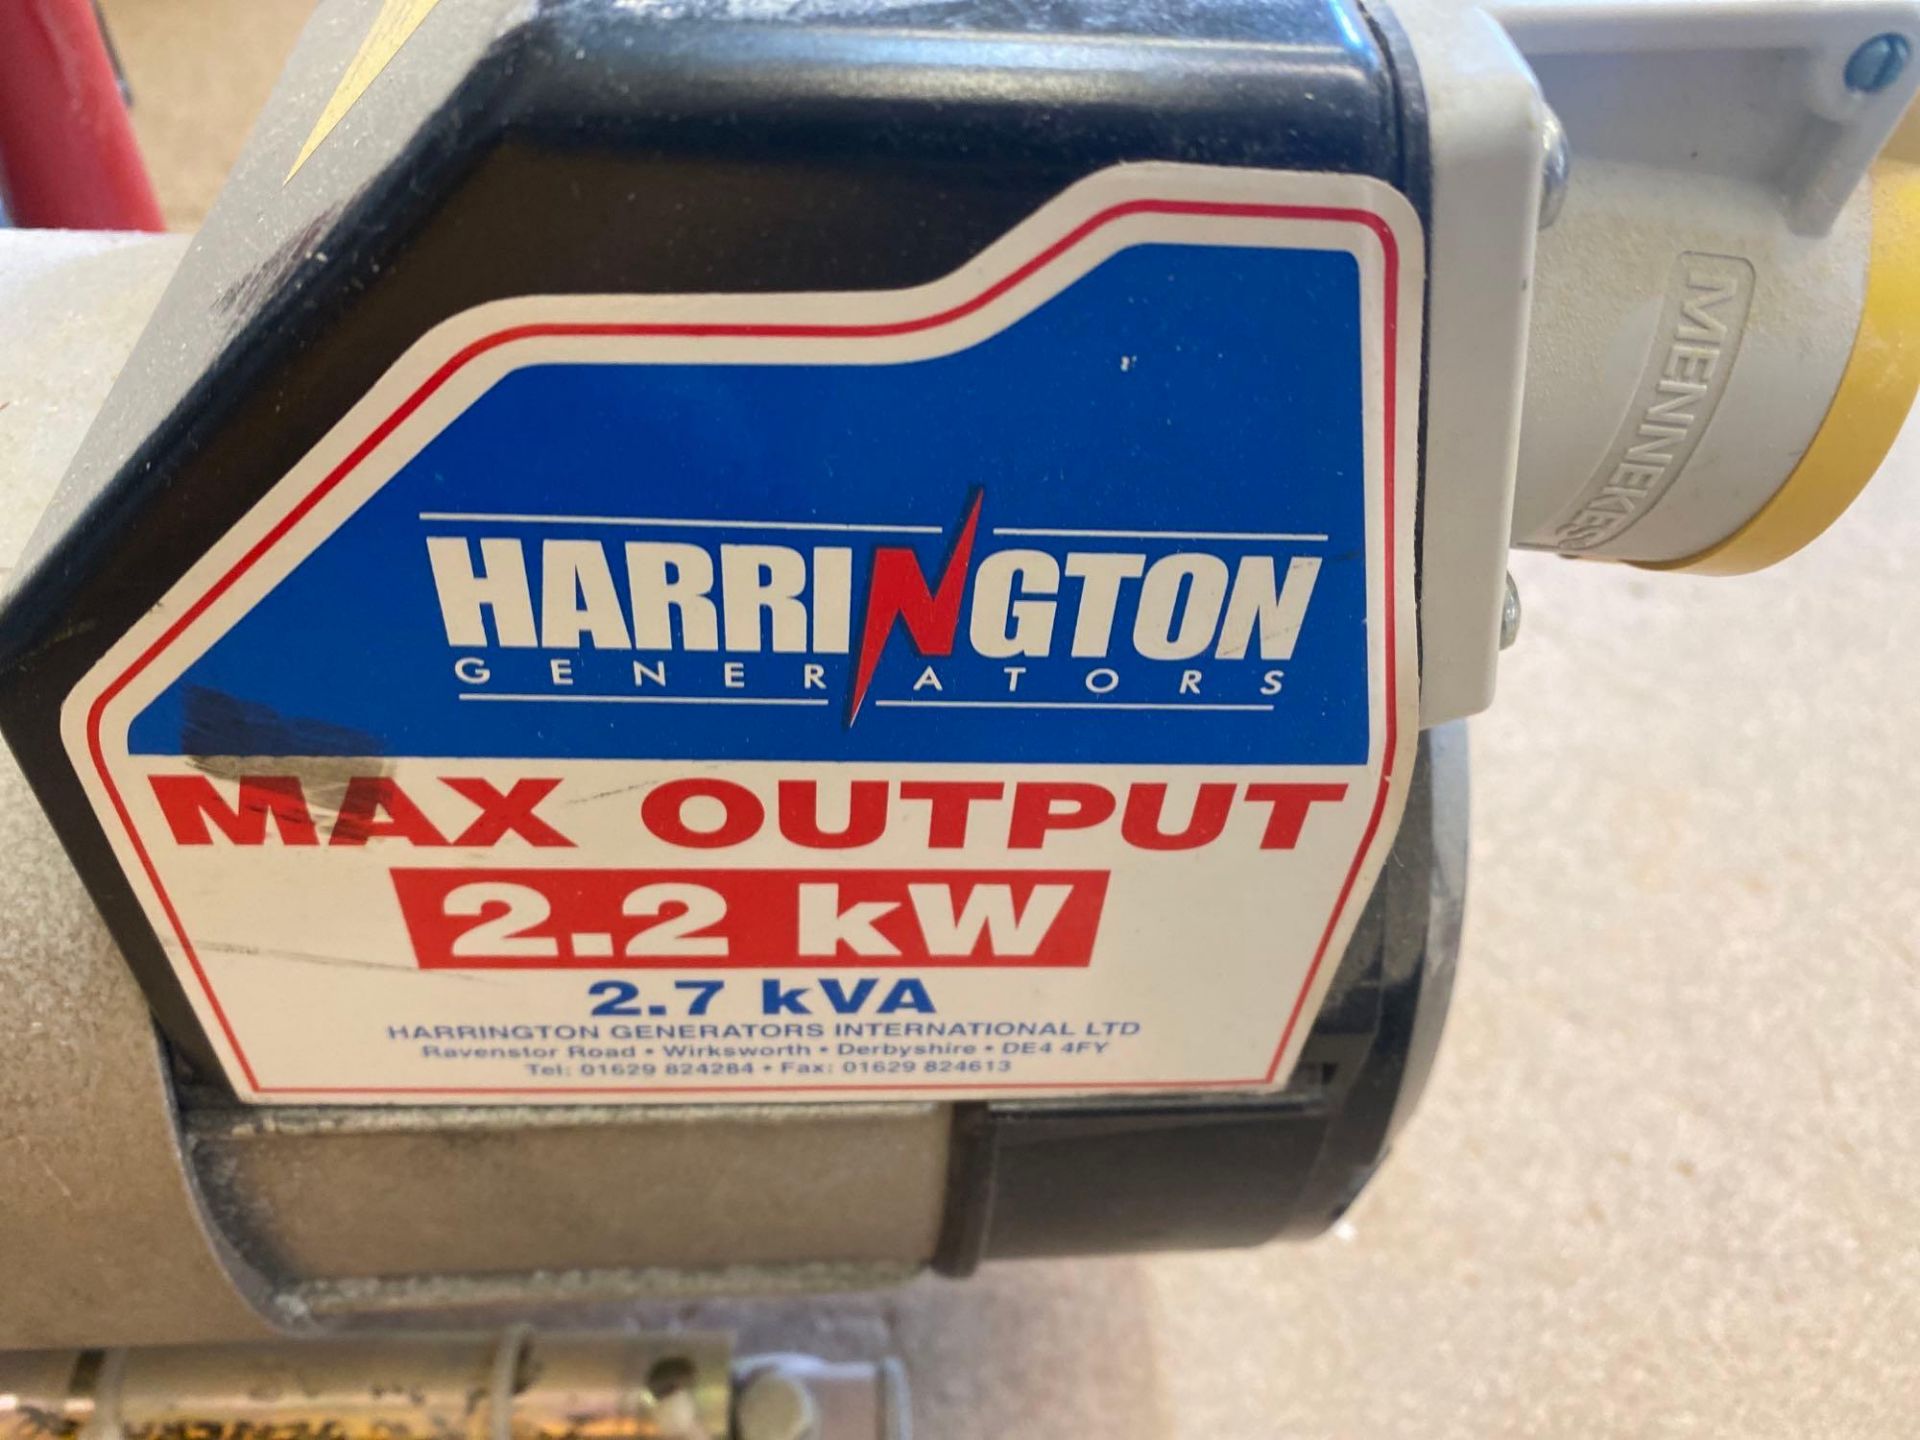 Harrington petrol generator 2.2kw 2.7kva Serial No. 2283313 - Image 5 of 6